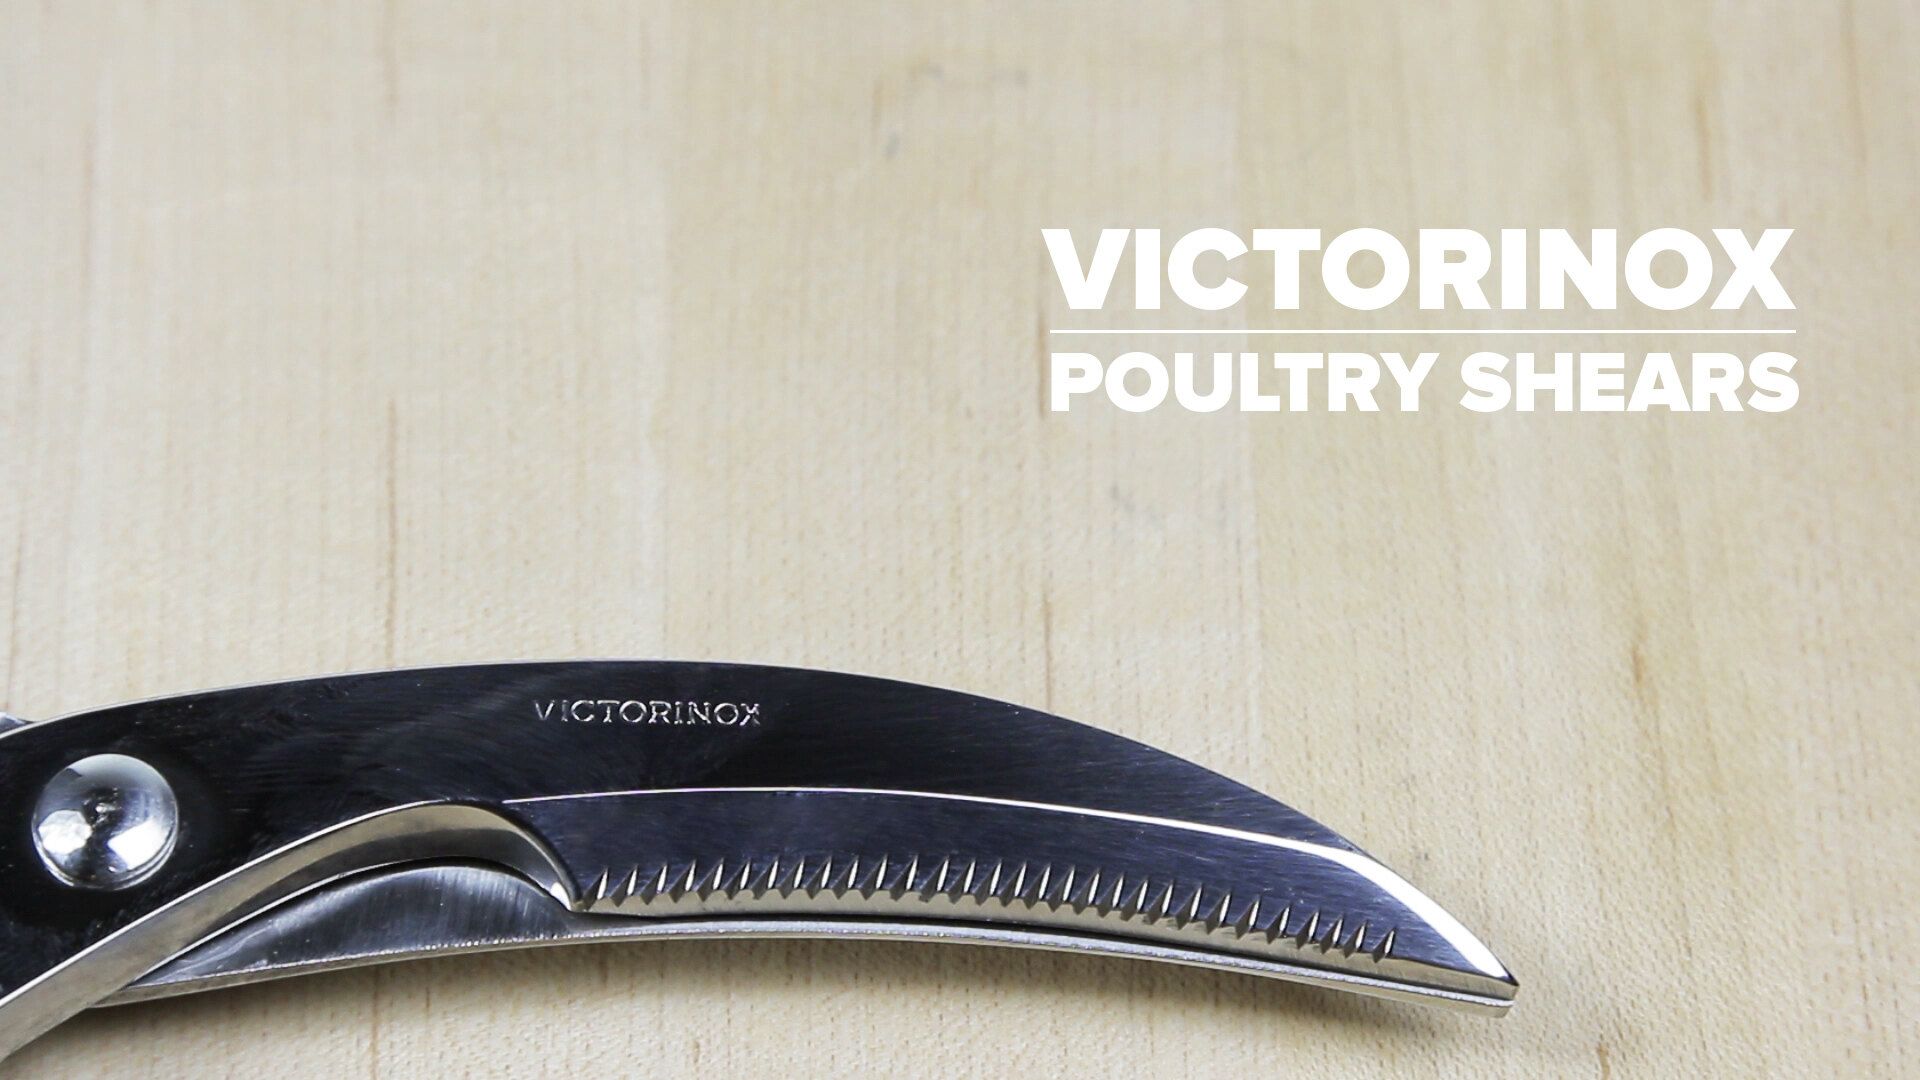 Victorinox 45903 10 Heavy Duty Stainless Steel Poultry Shears